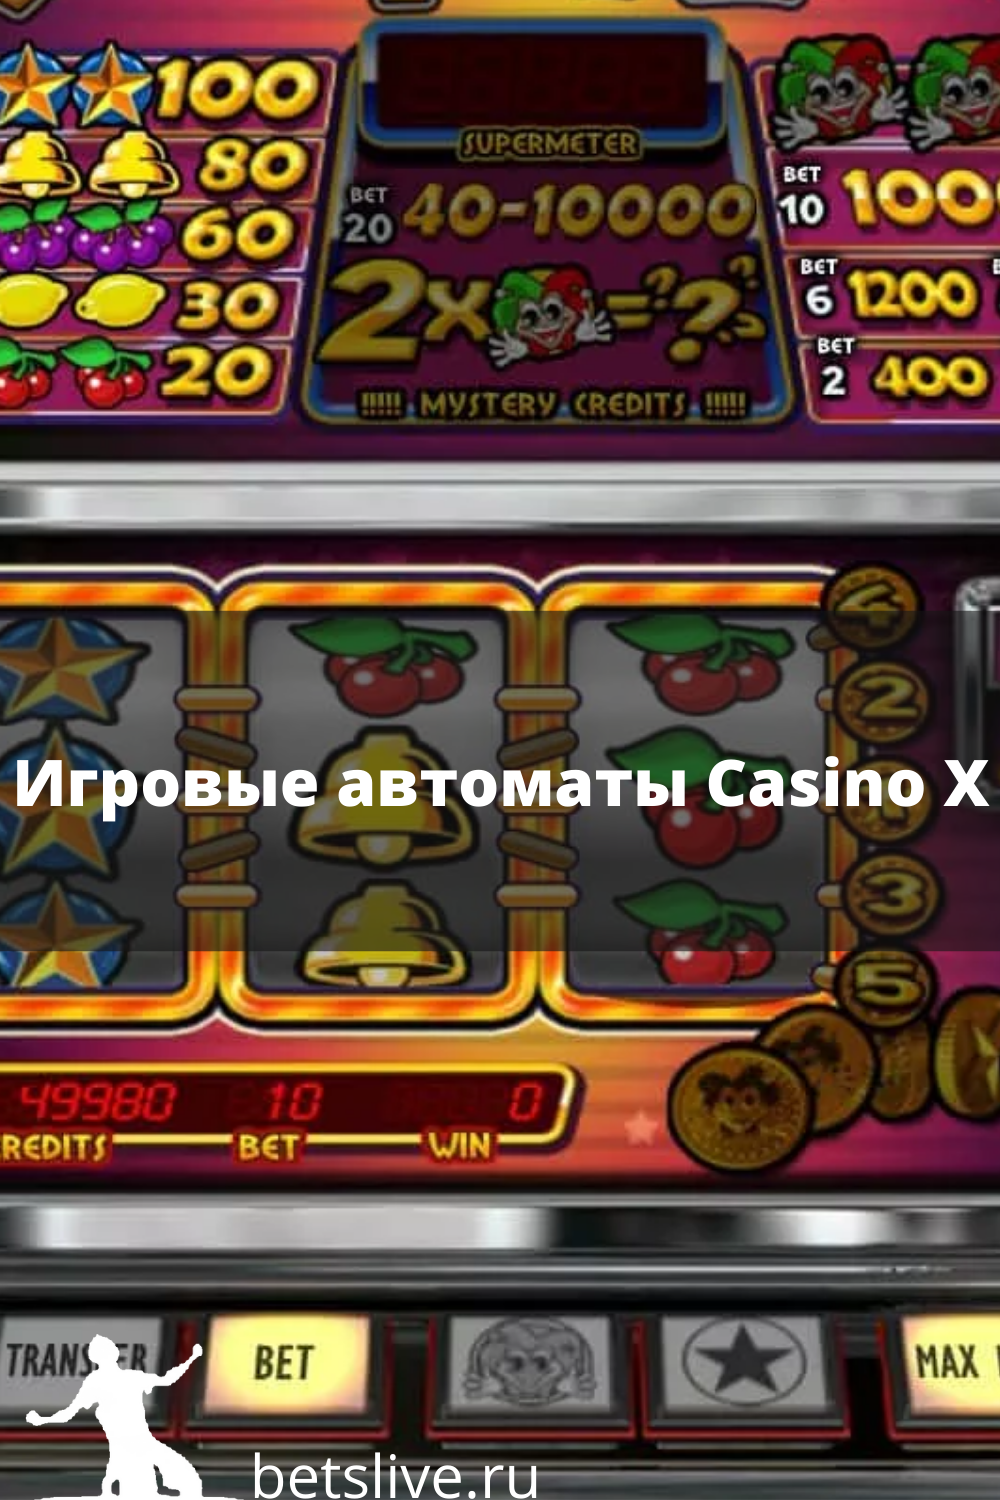 Casino x бонус код касинокс13 ru